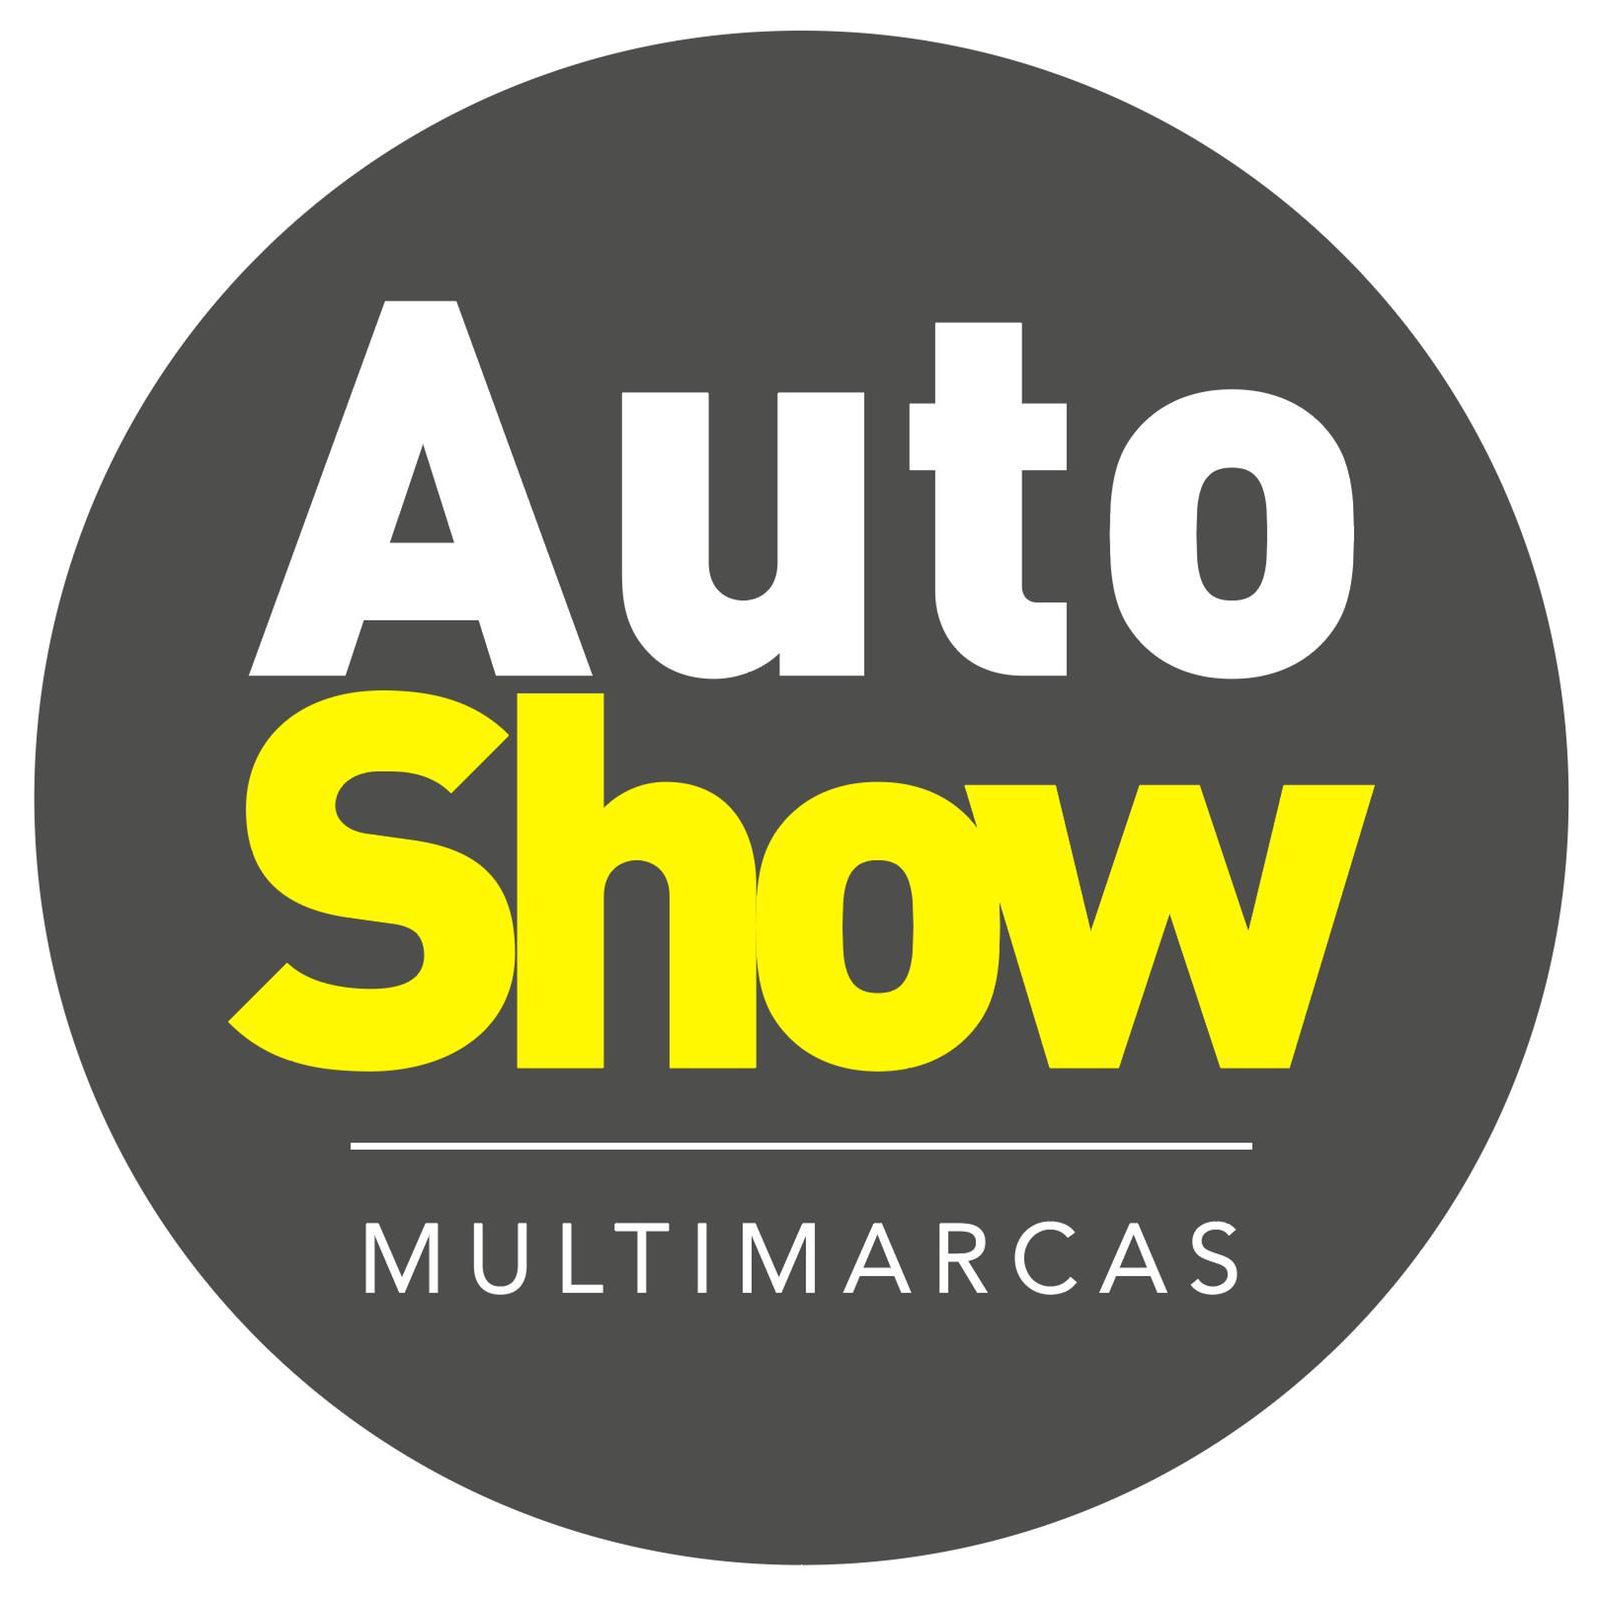 Coches segunda mano Alicante - Autoshow Multimarca Logo